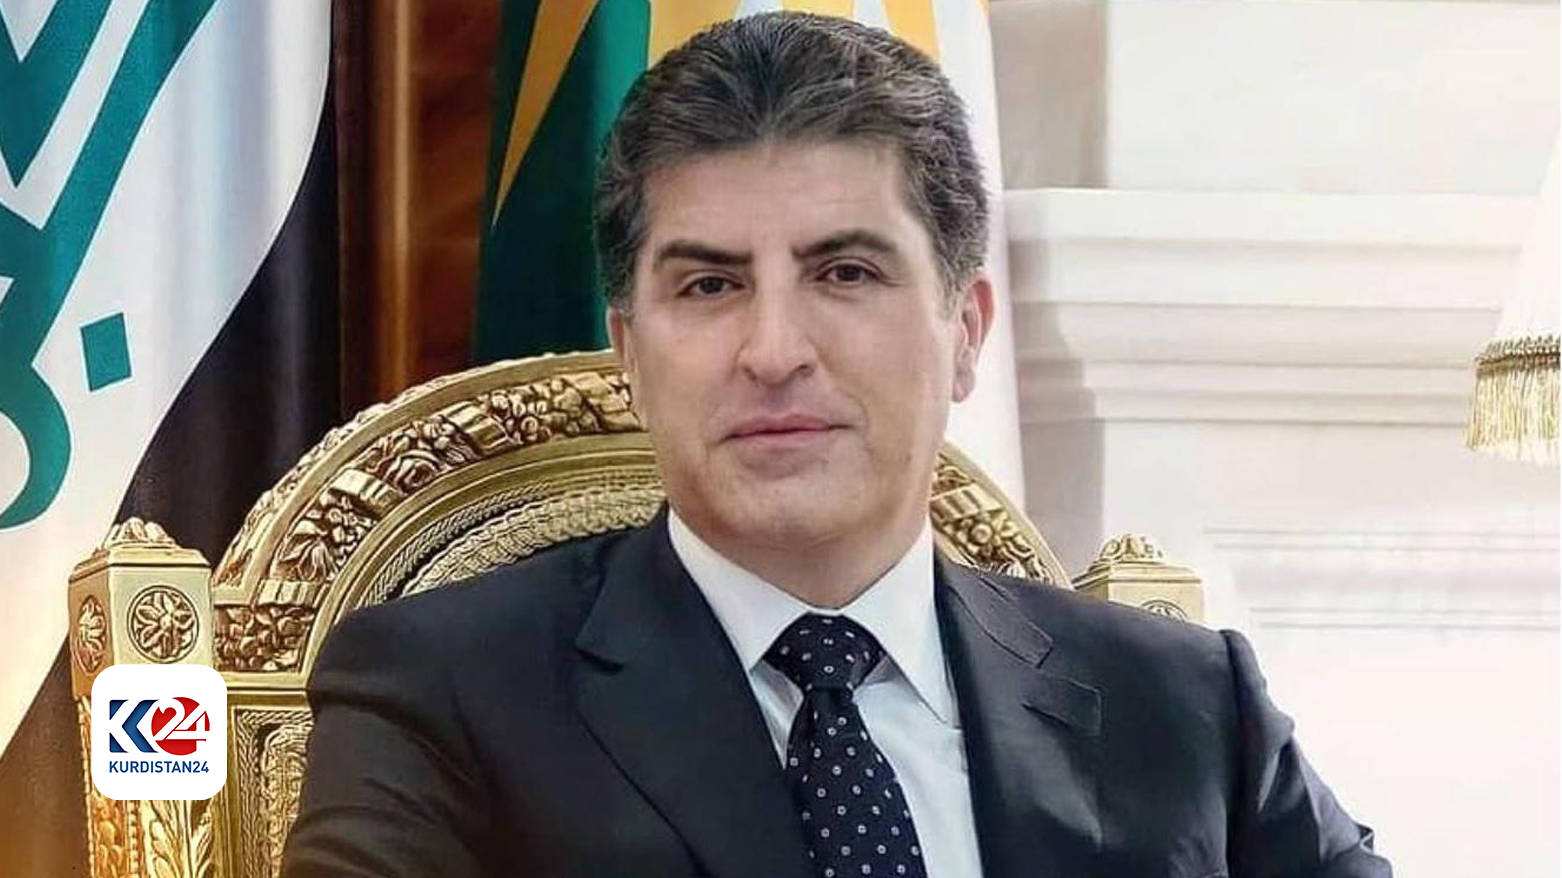 The President of the Kurdistan Region, Nechirvan Barzani. (Photo: Kurdistan Region Presidency)